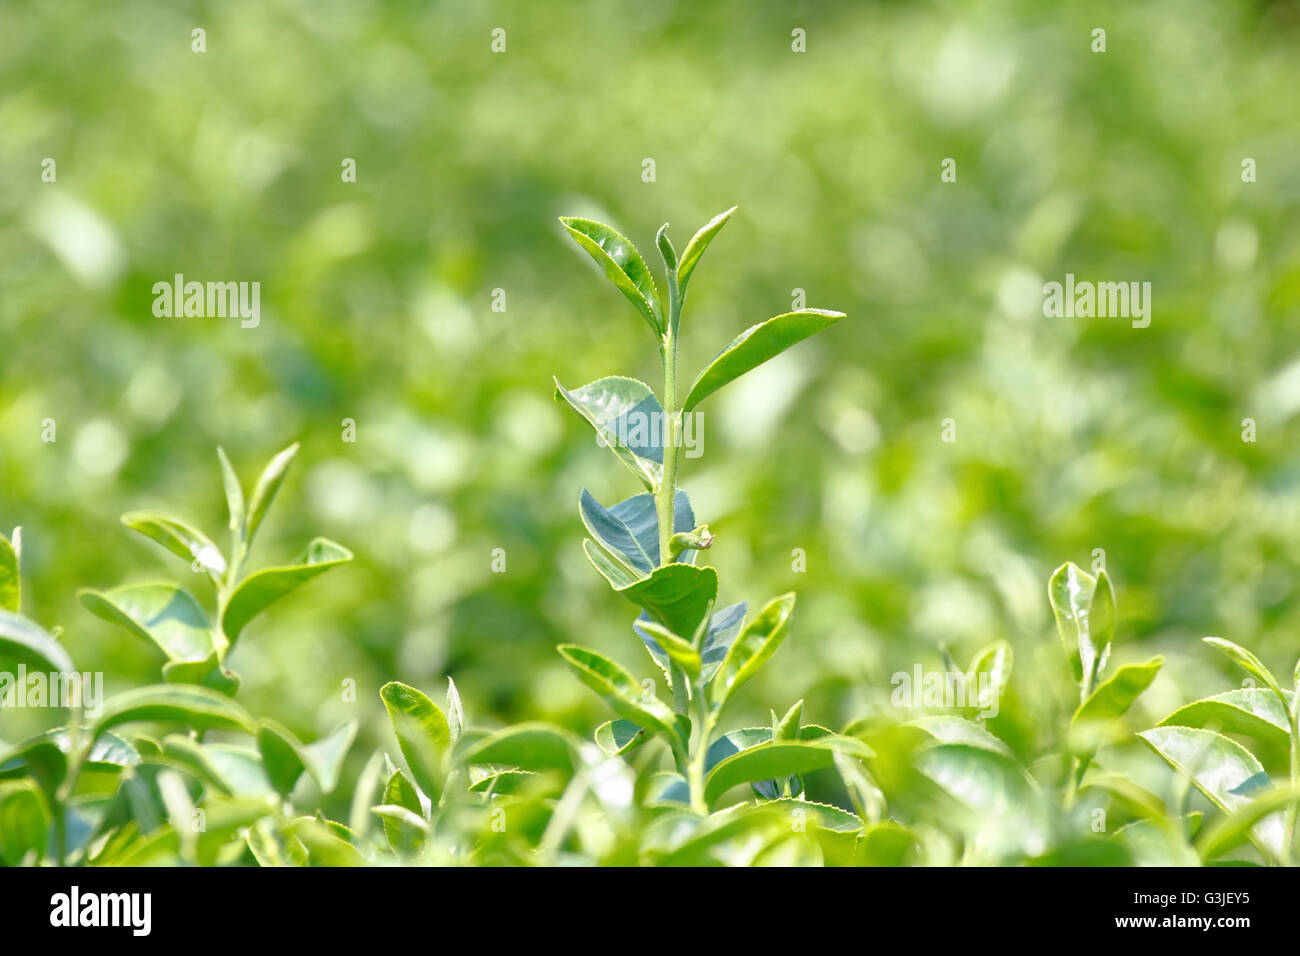 Tea plant (Camellia sinensis var. sinensis / Chinese tea) the plant that use to produce aromatic beverage “tea” Stock Photo